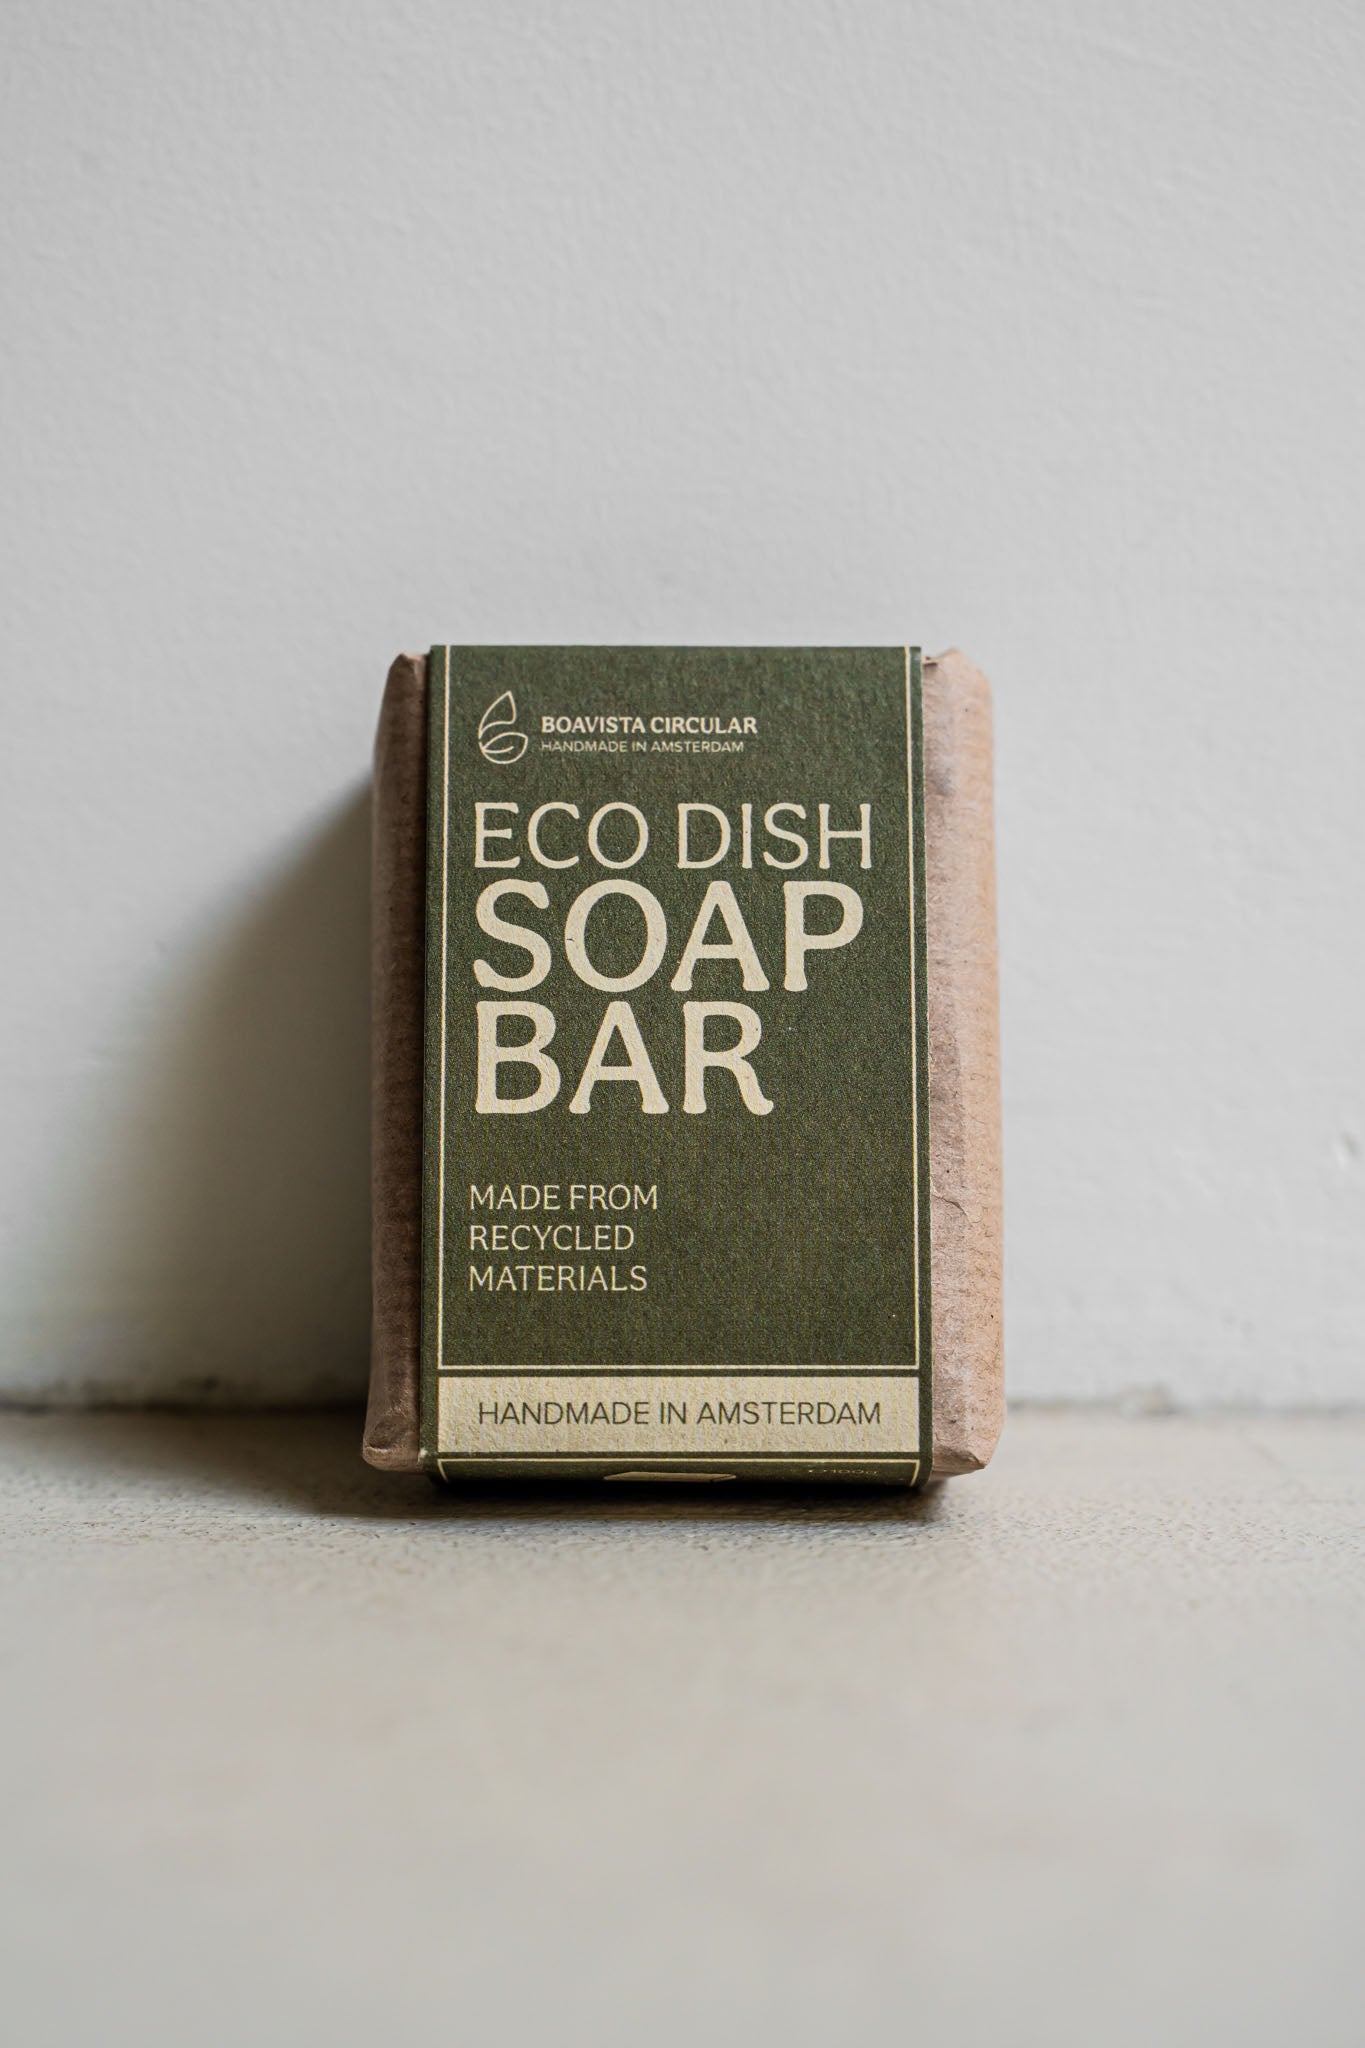 Eco dish soap bar